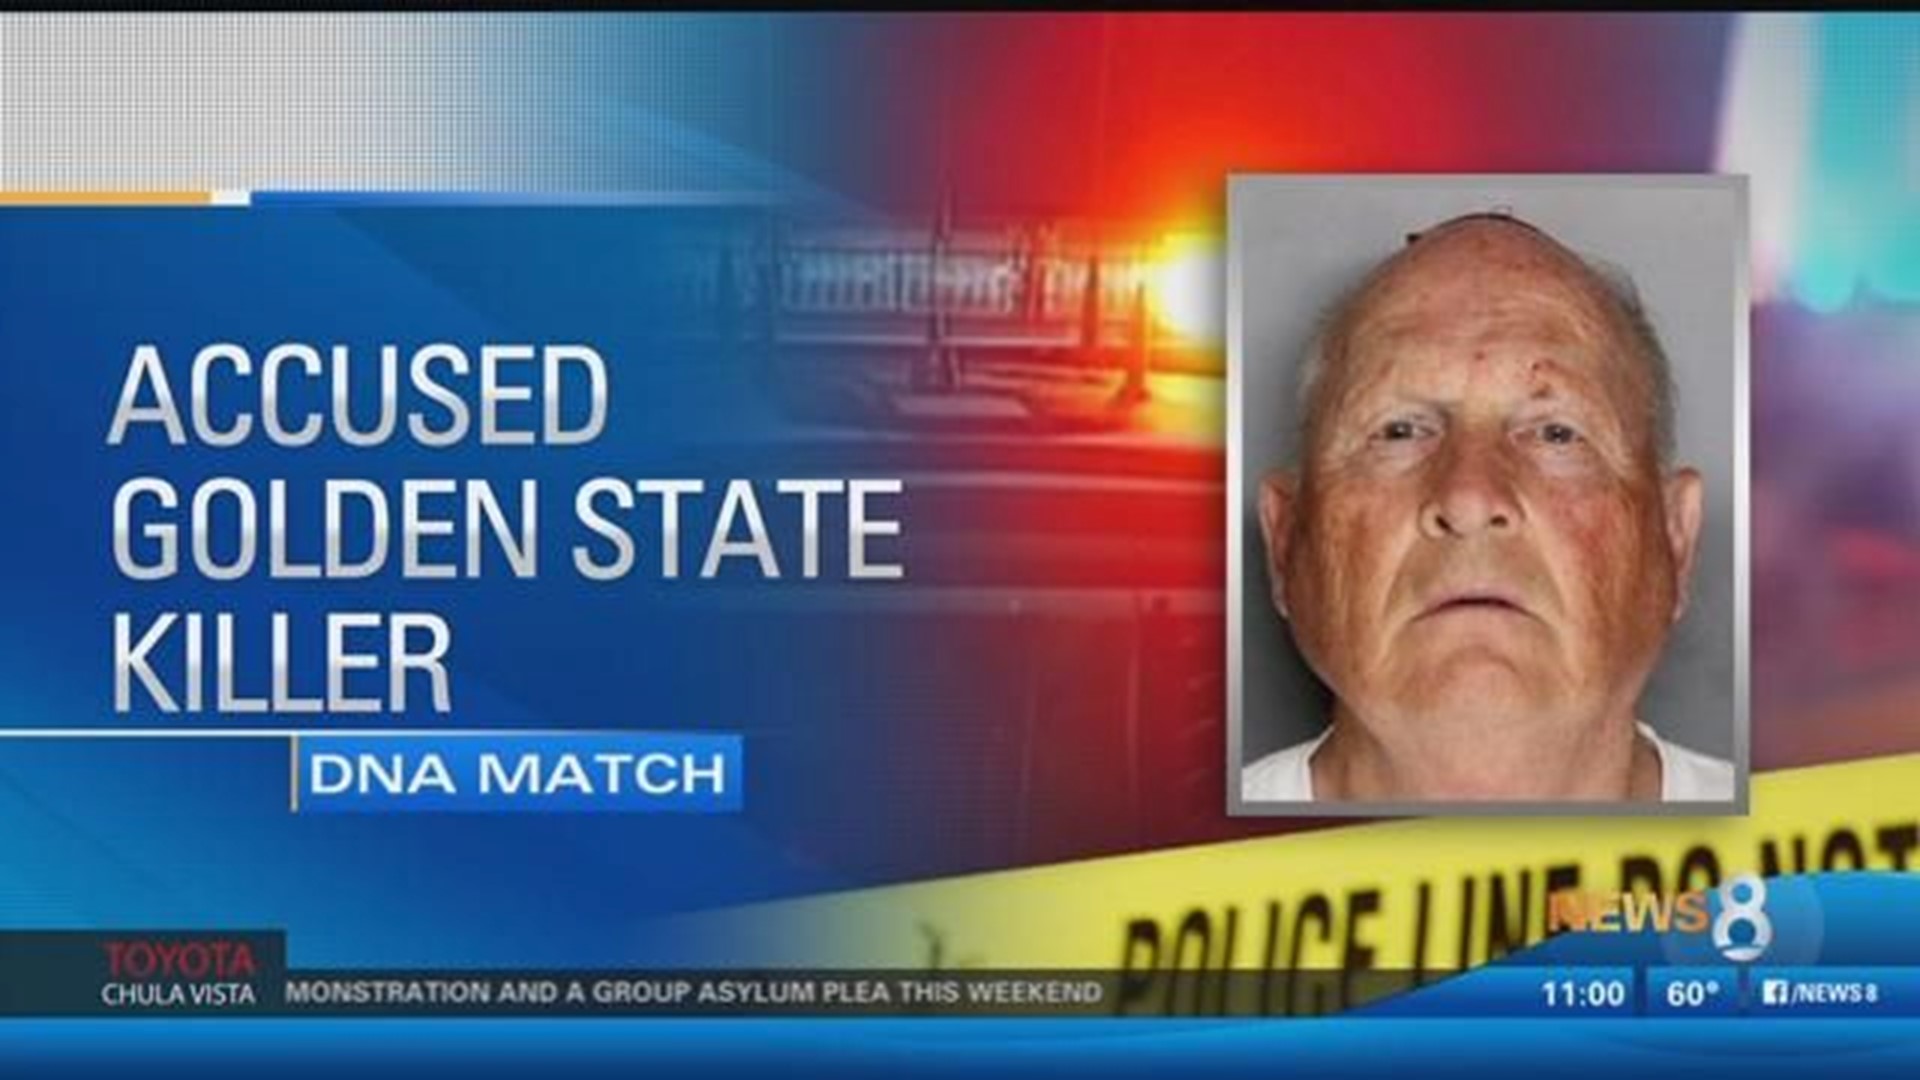 Investigators Dna From Genealogy Site Caught Golden State Killer 